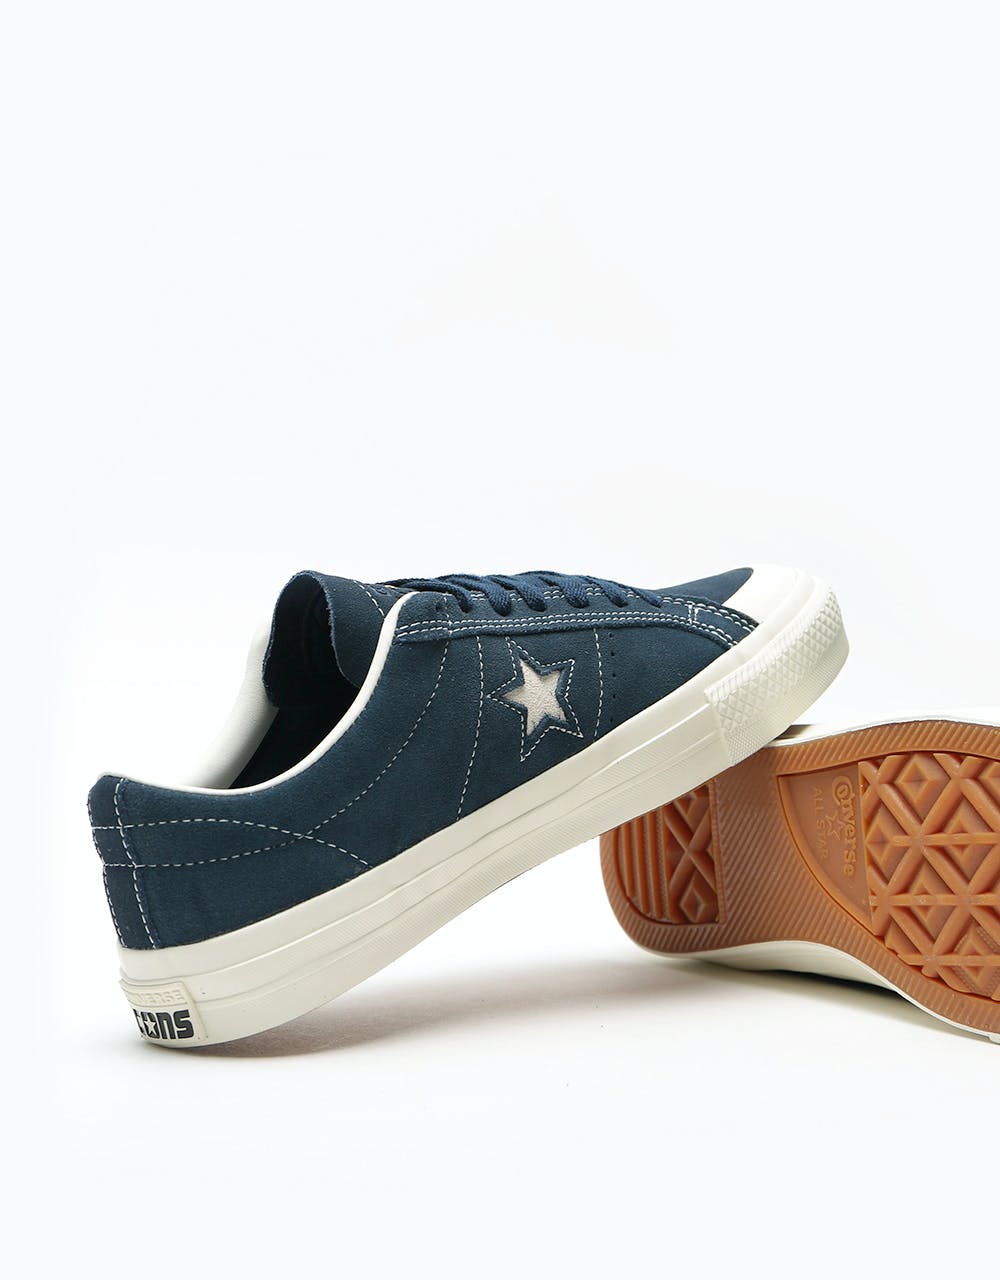 Converse One Star Pro AS Ox Skate Shoes - Obisidian/Egret/Egret